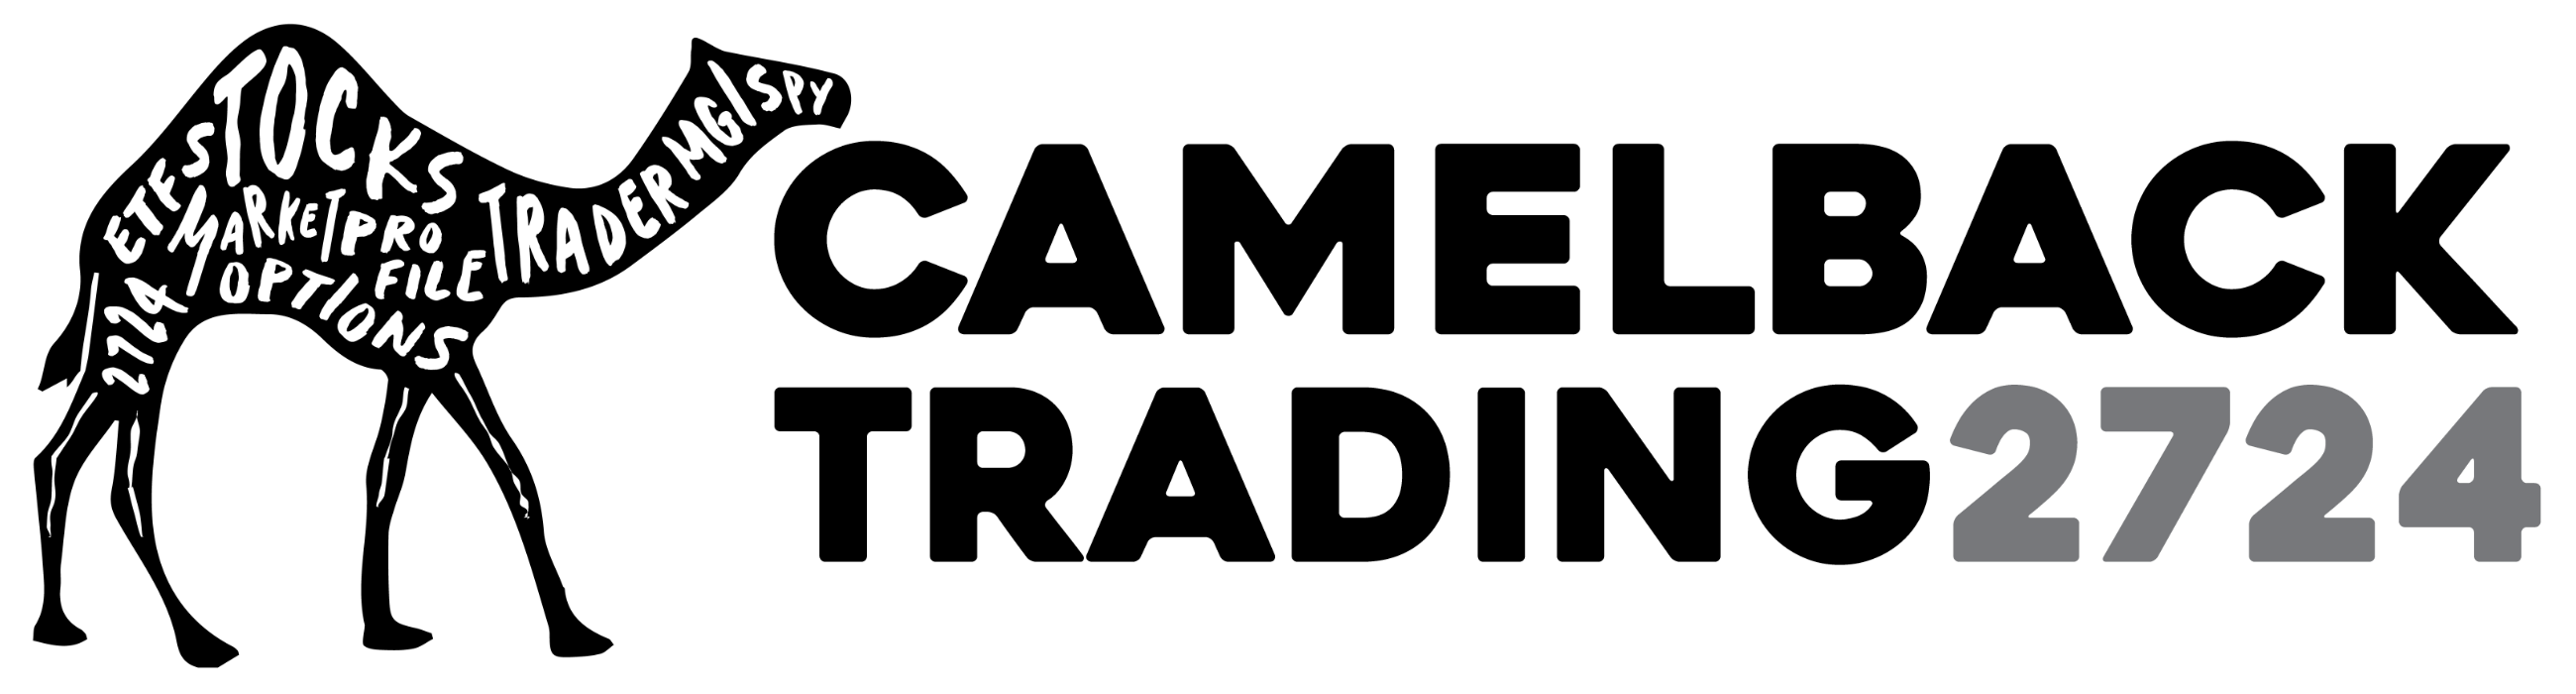 Camelback Trading